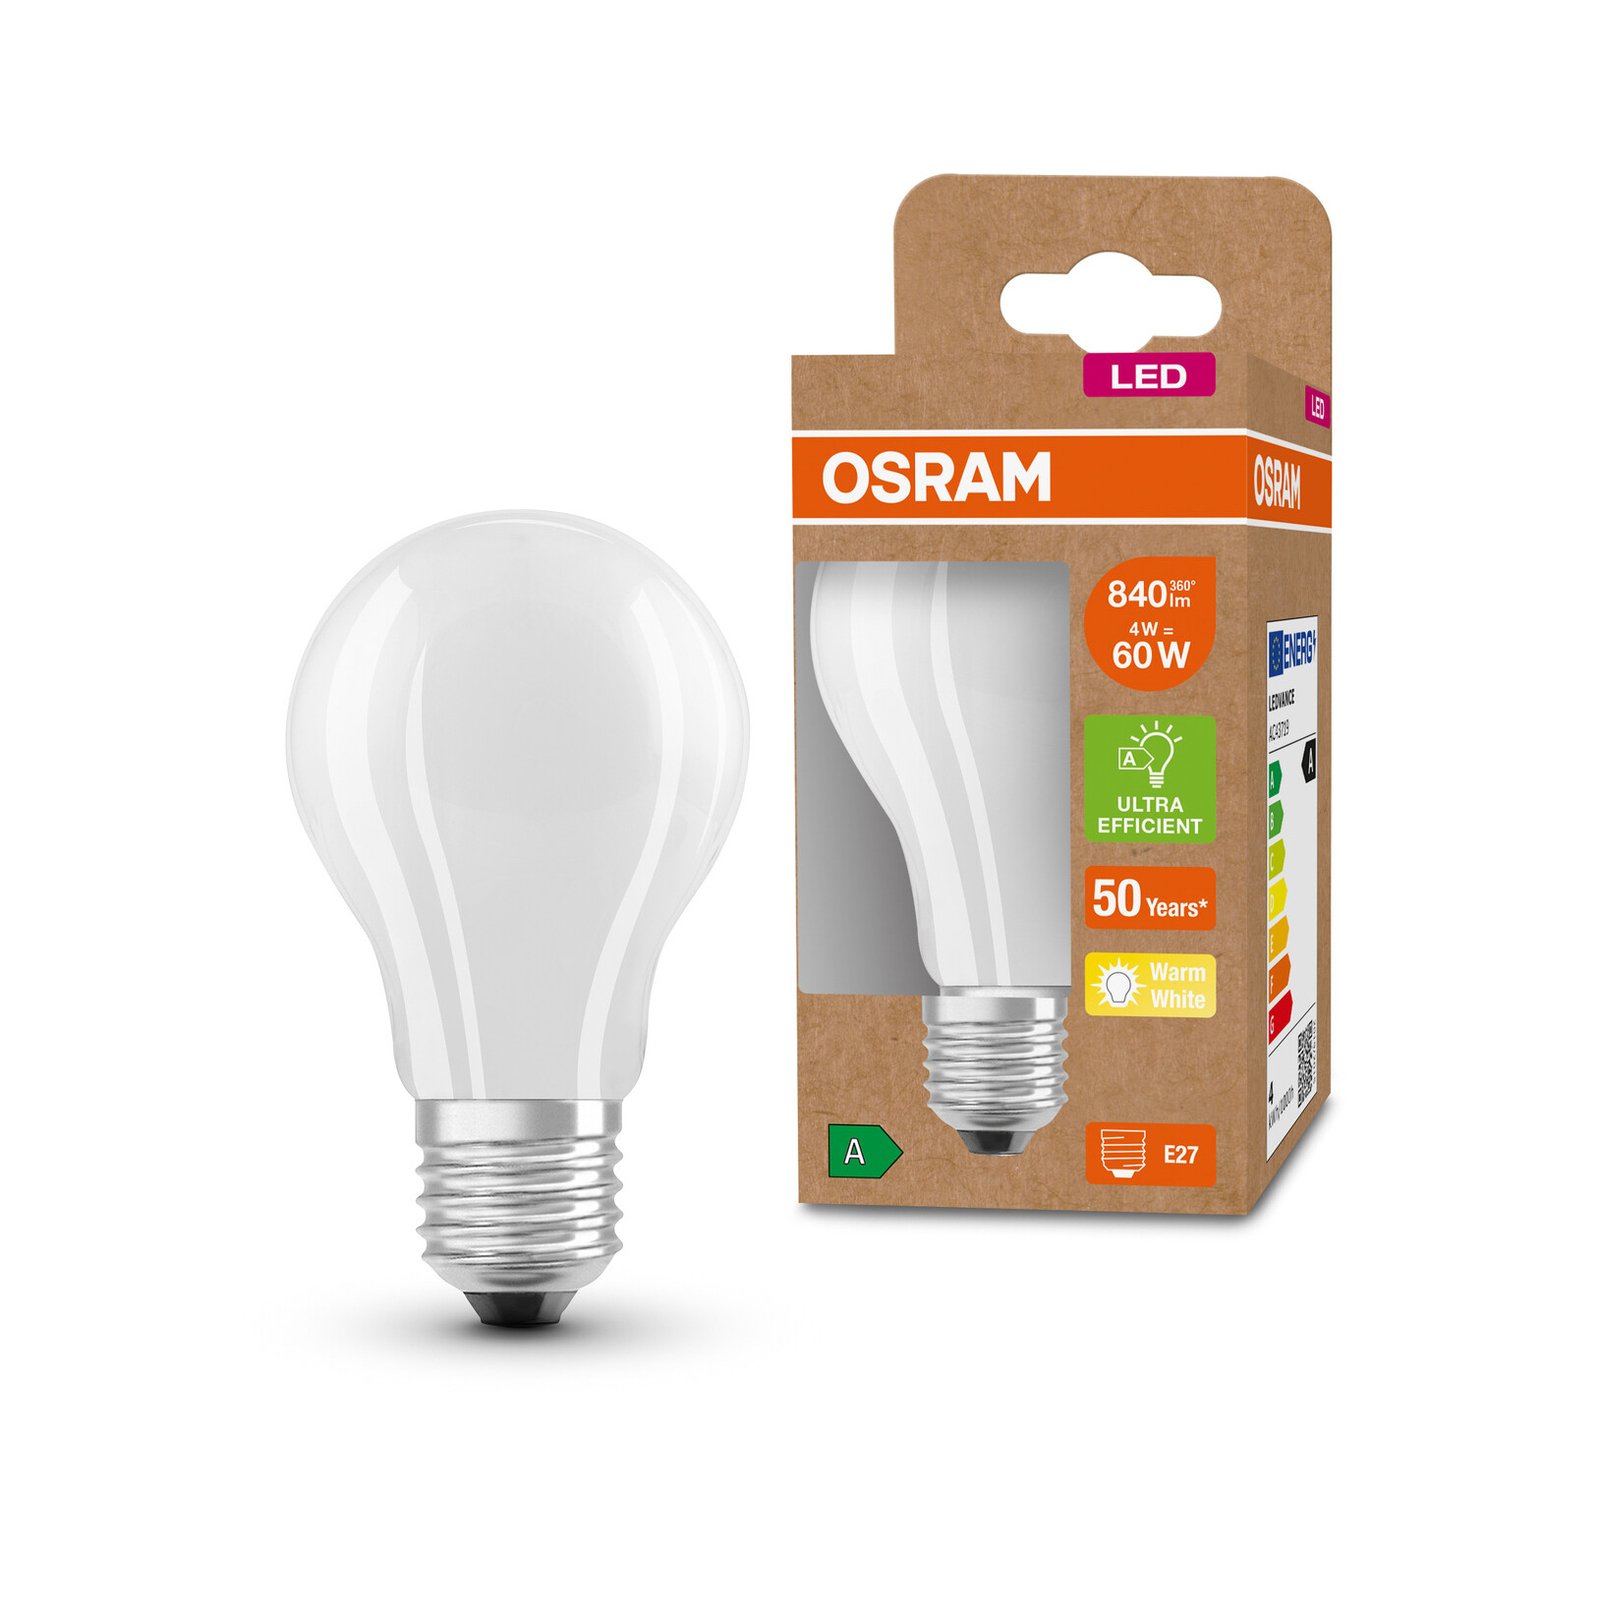 OSRAM LED lamp E27 A60 3,8W 840lm 3.000K mat